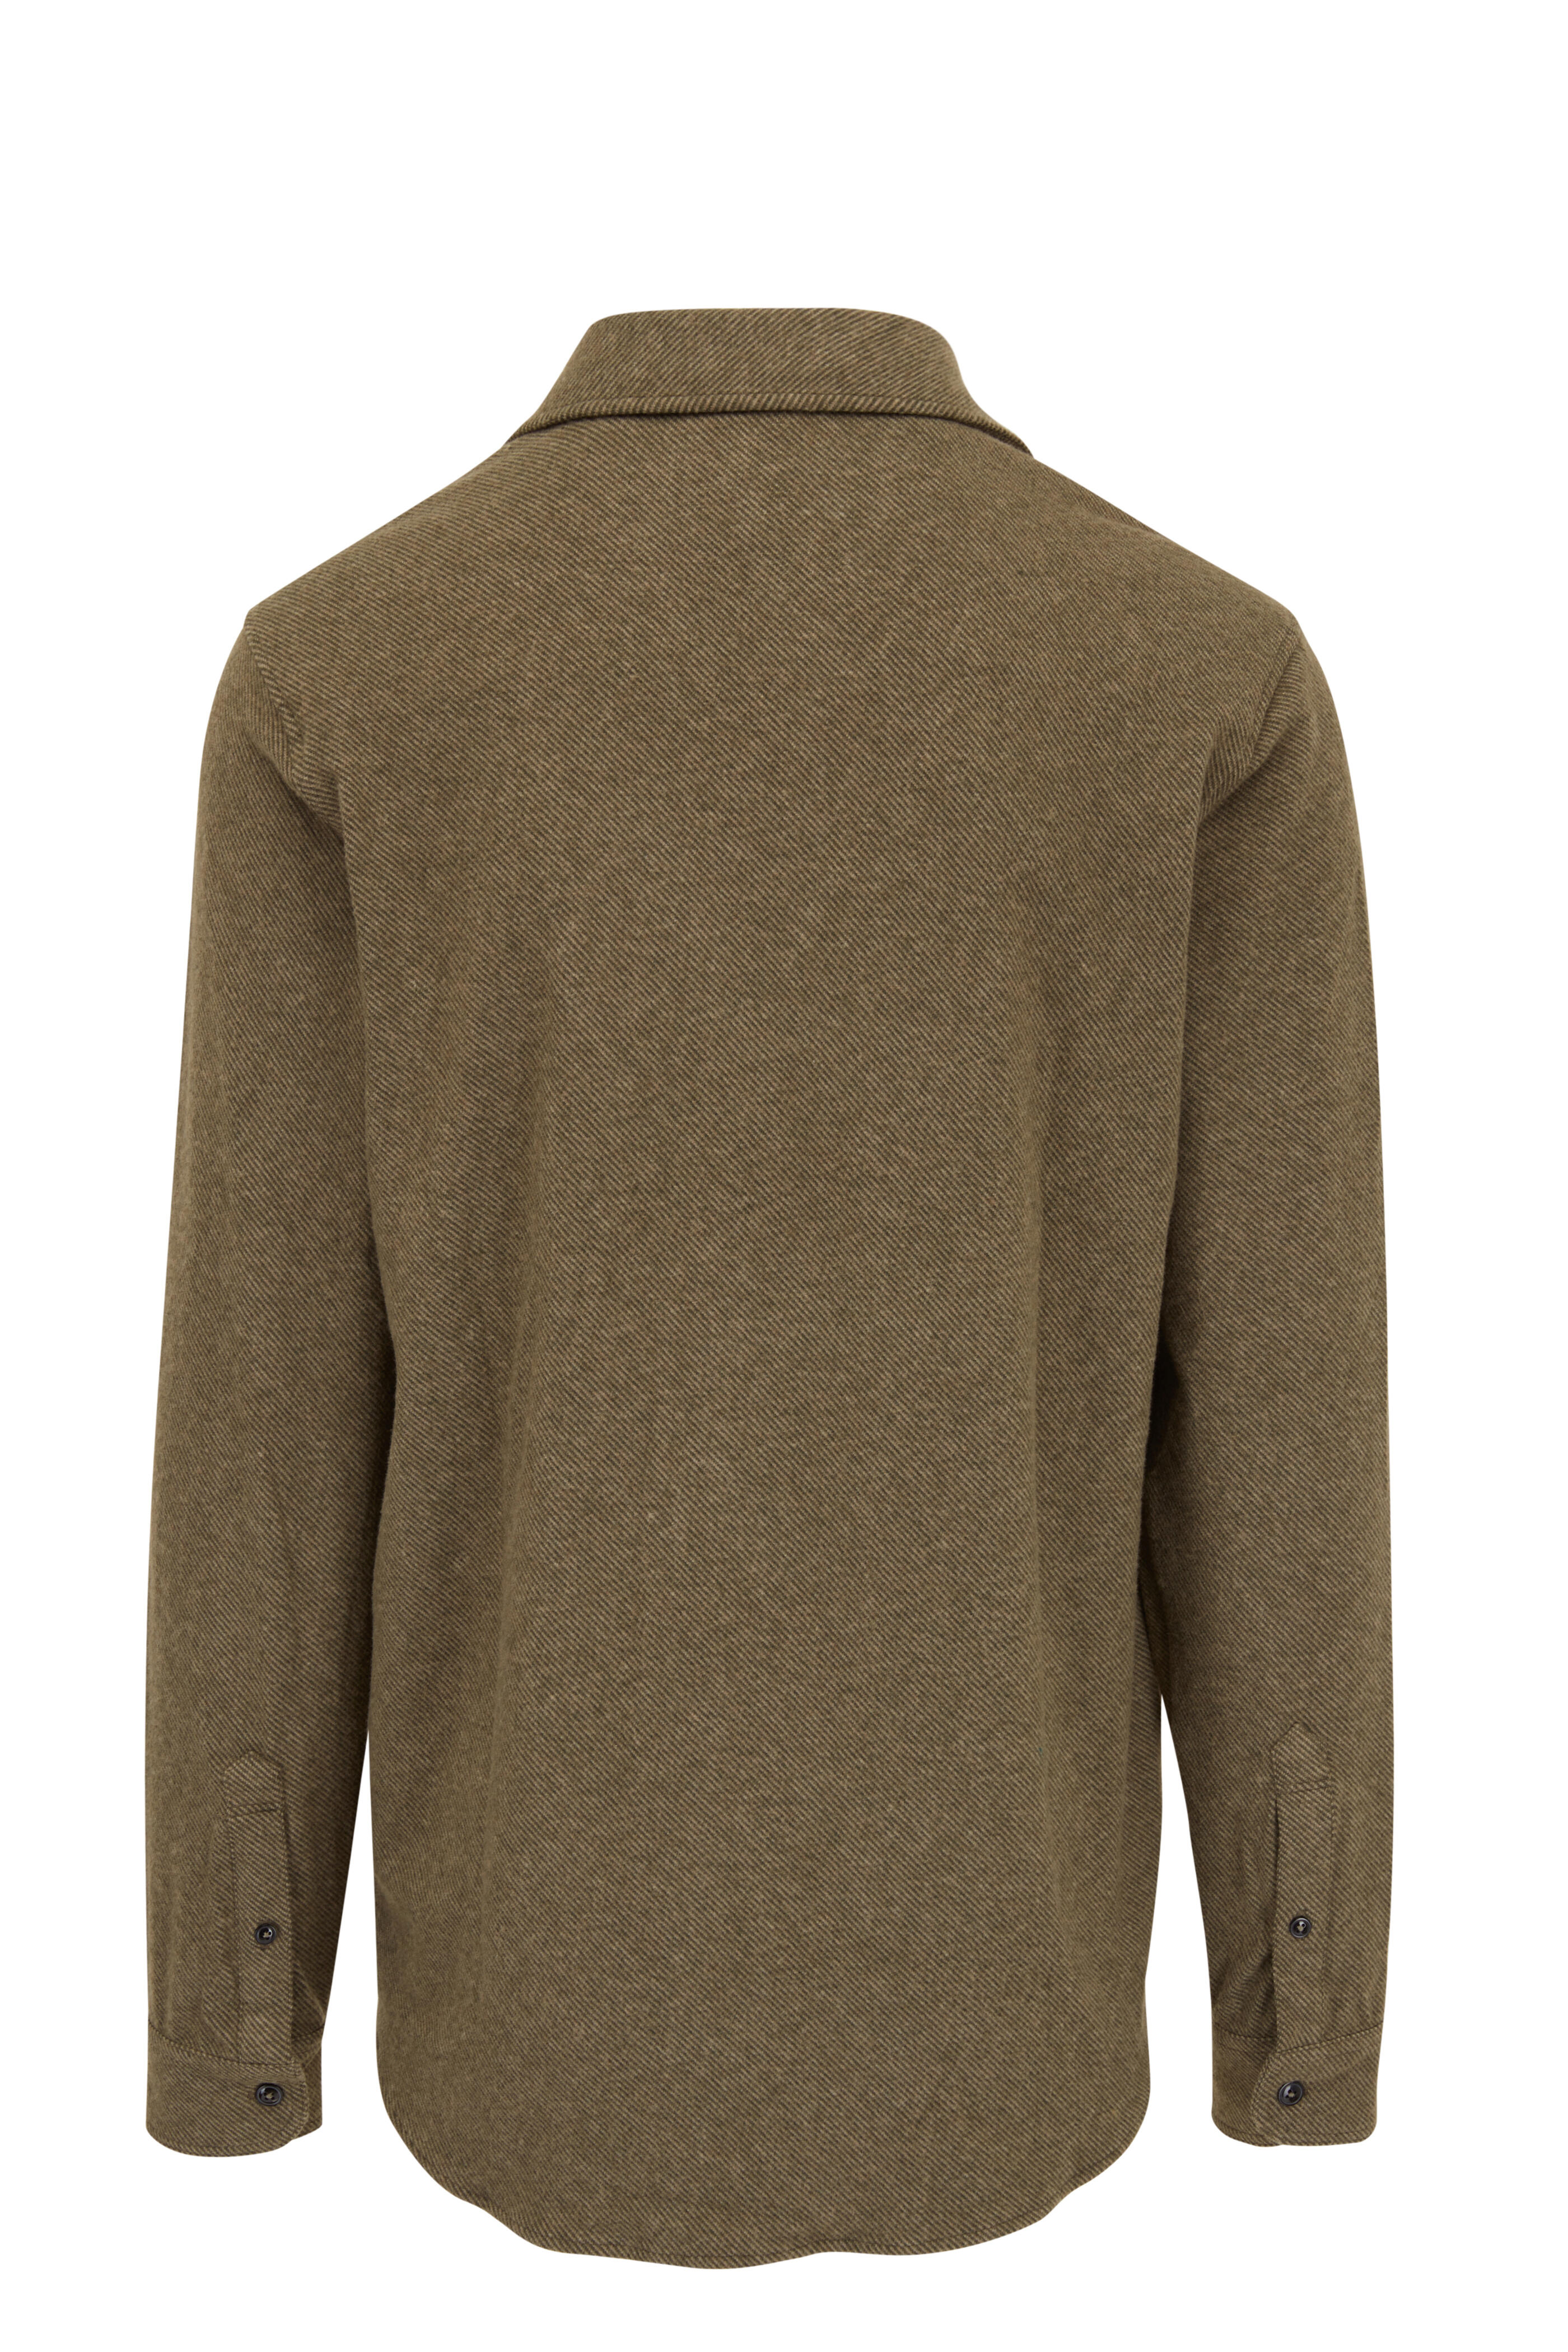 Faherty Brand - Legend™ Olive Mélange Twill Sweater Shirt